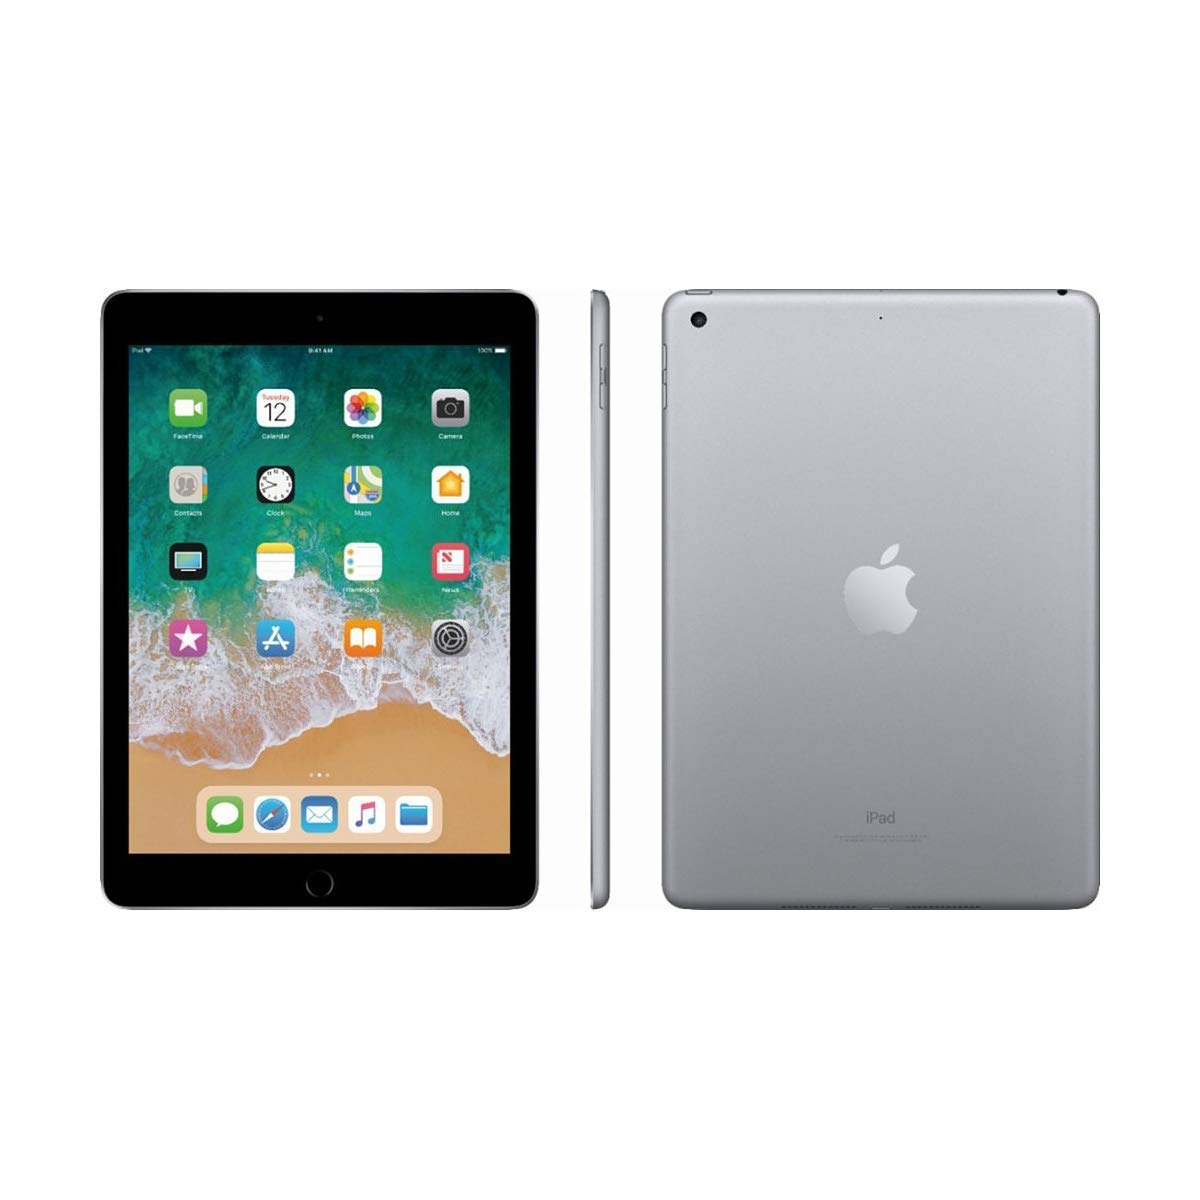 Apple iPad 9.7in 6th Generation WiFi + Cellular (32GB, Space Gray) (Renewed)